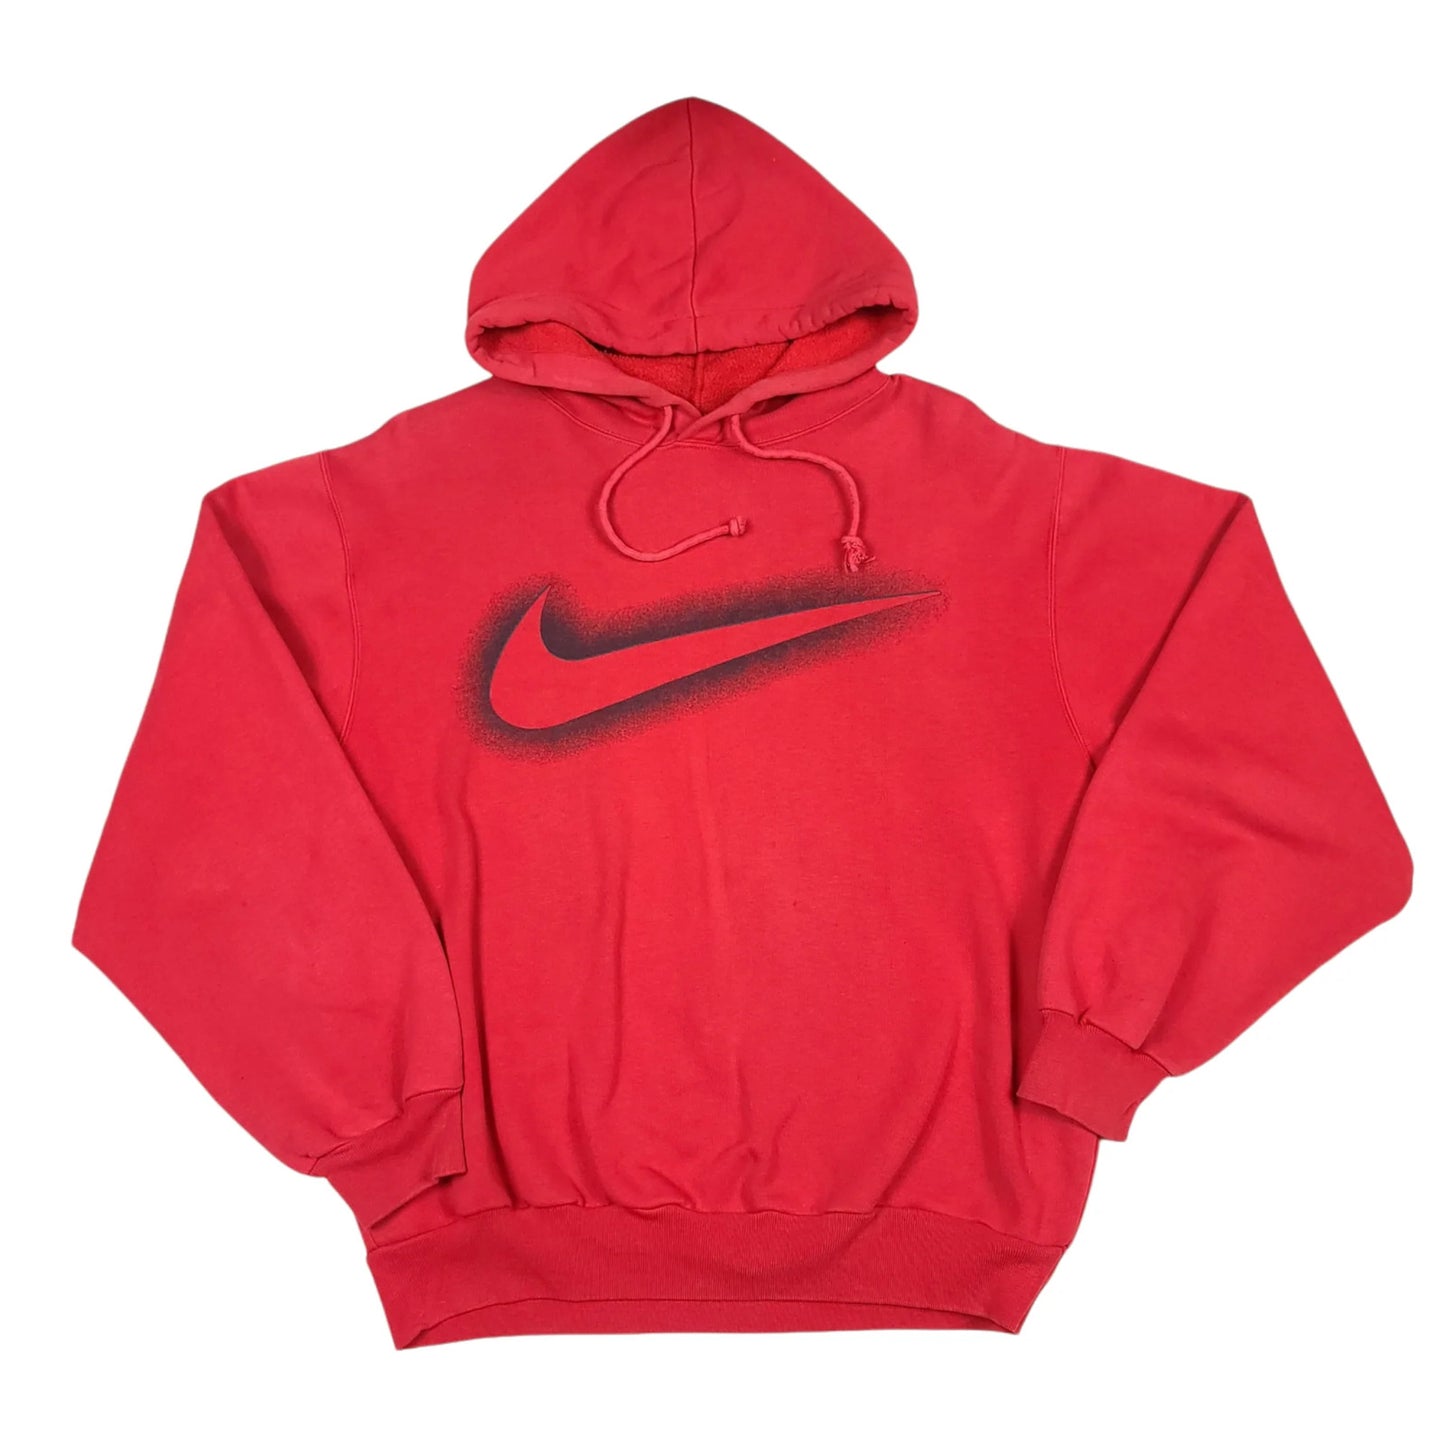 Nike Red Swoosh Definition Hoodie